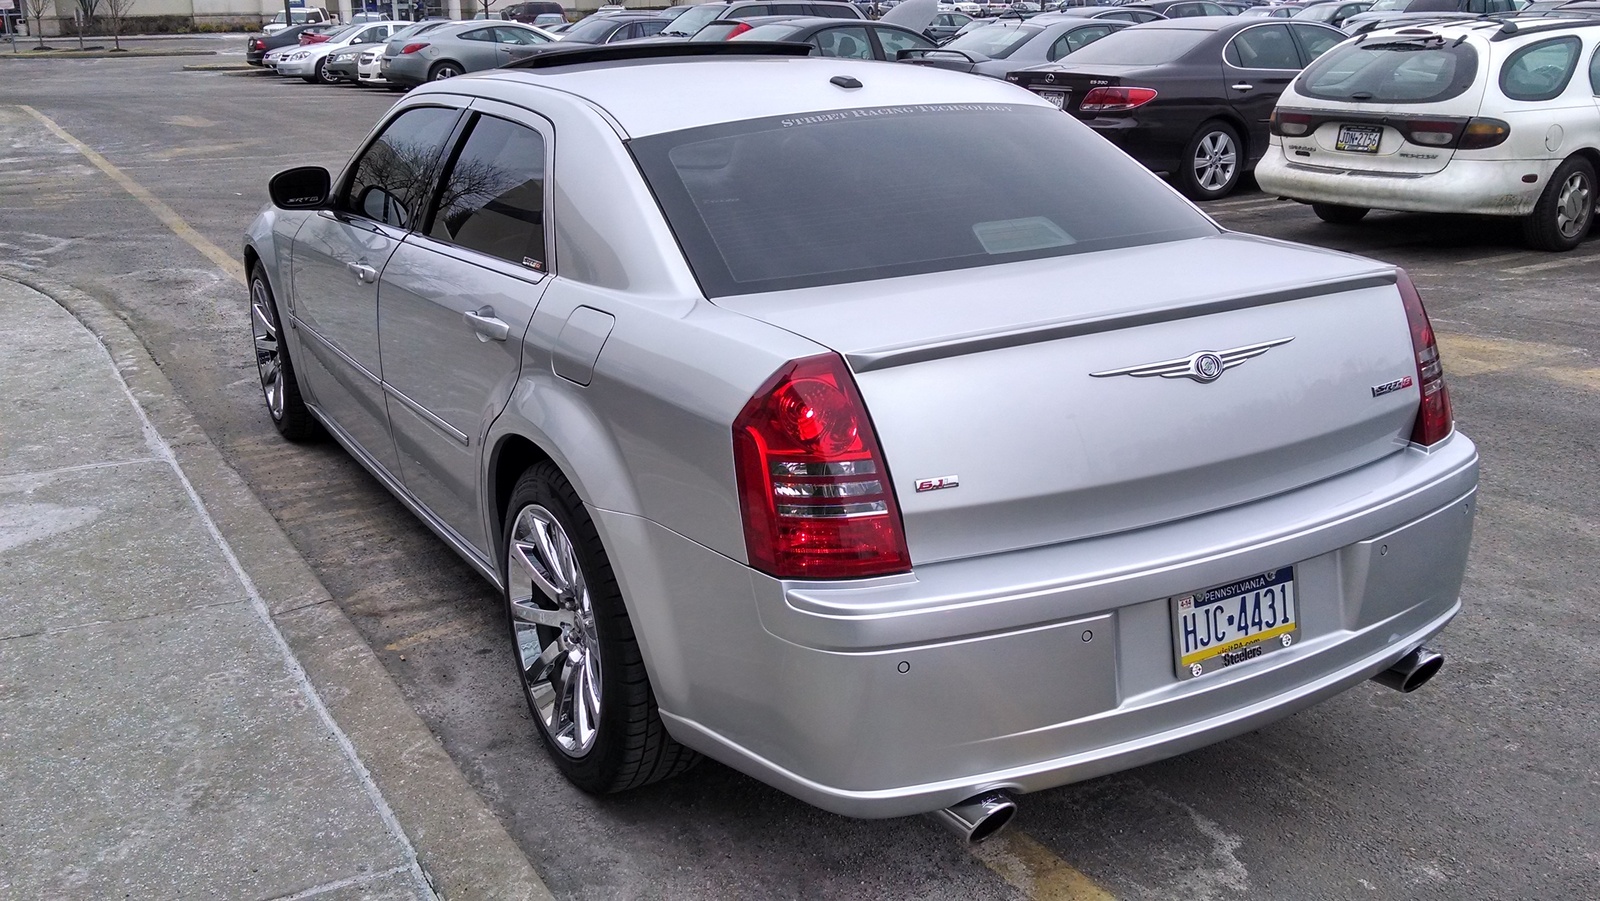 Chrysler 4.7 performance modifications #5